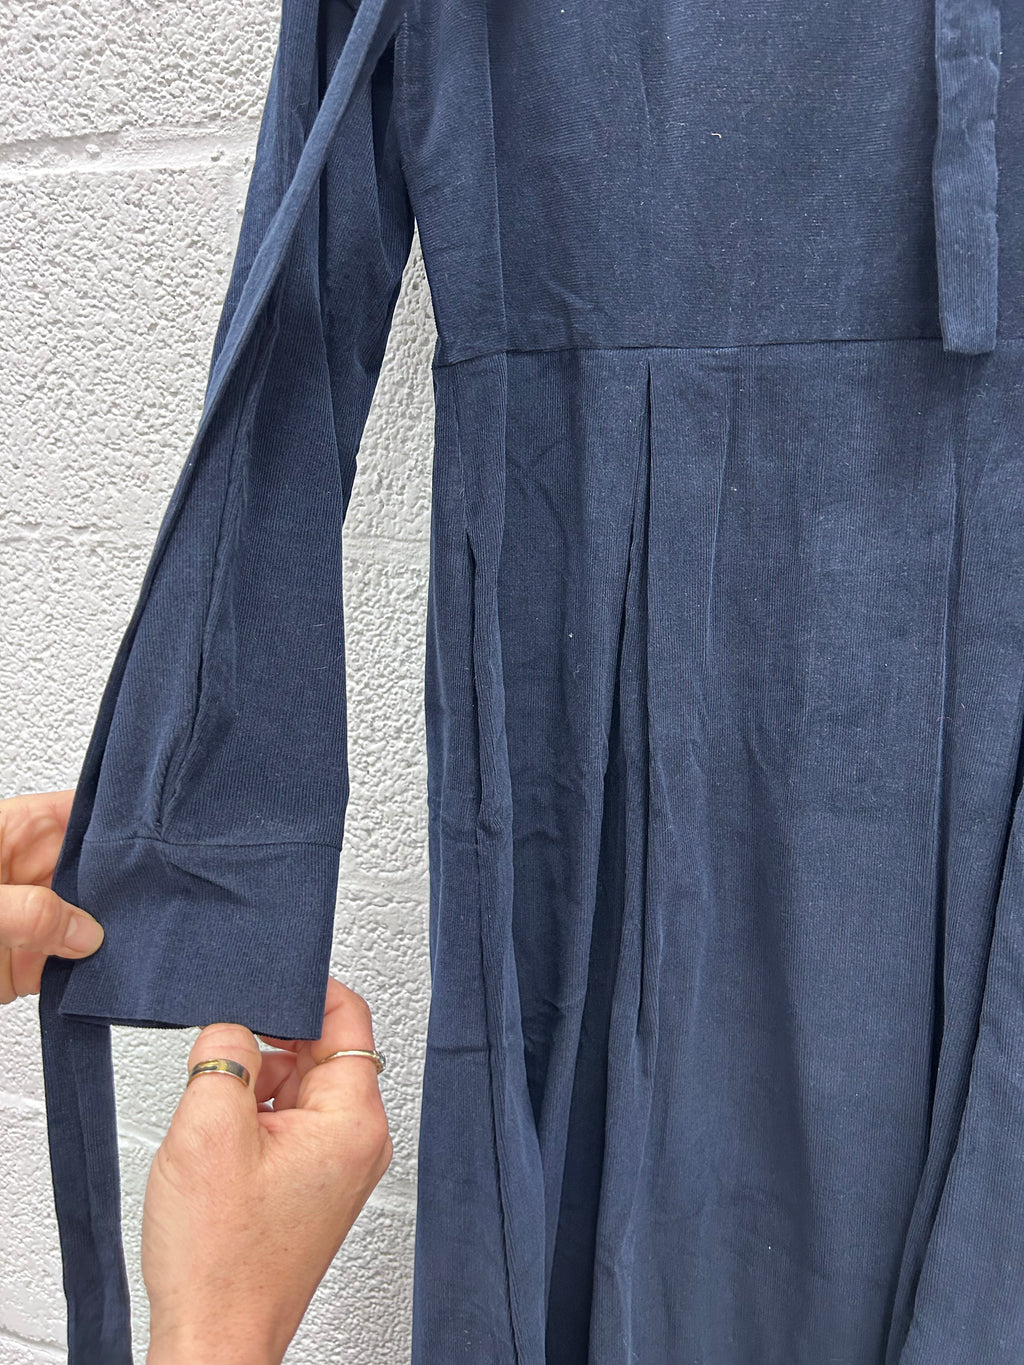 #61 imparfait - robe Siloé en velours millerayes bleu marine